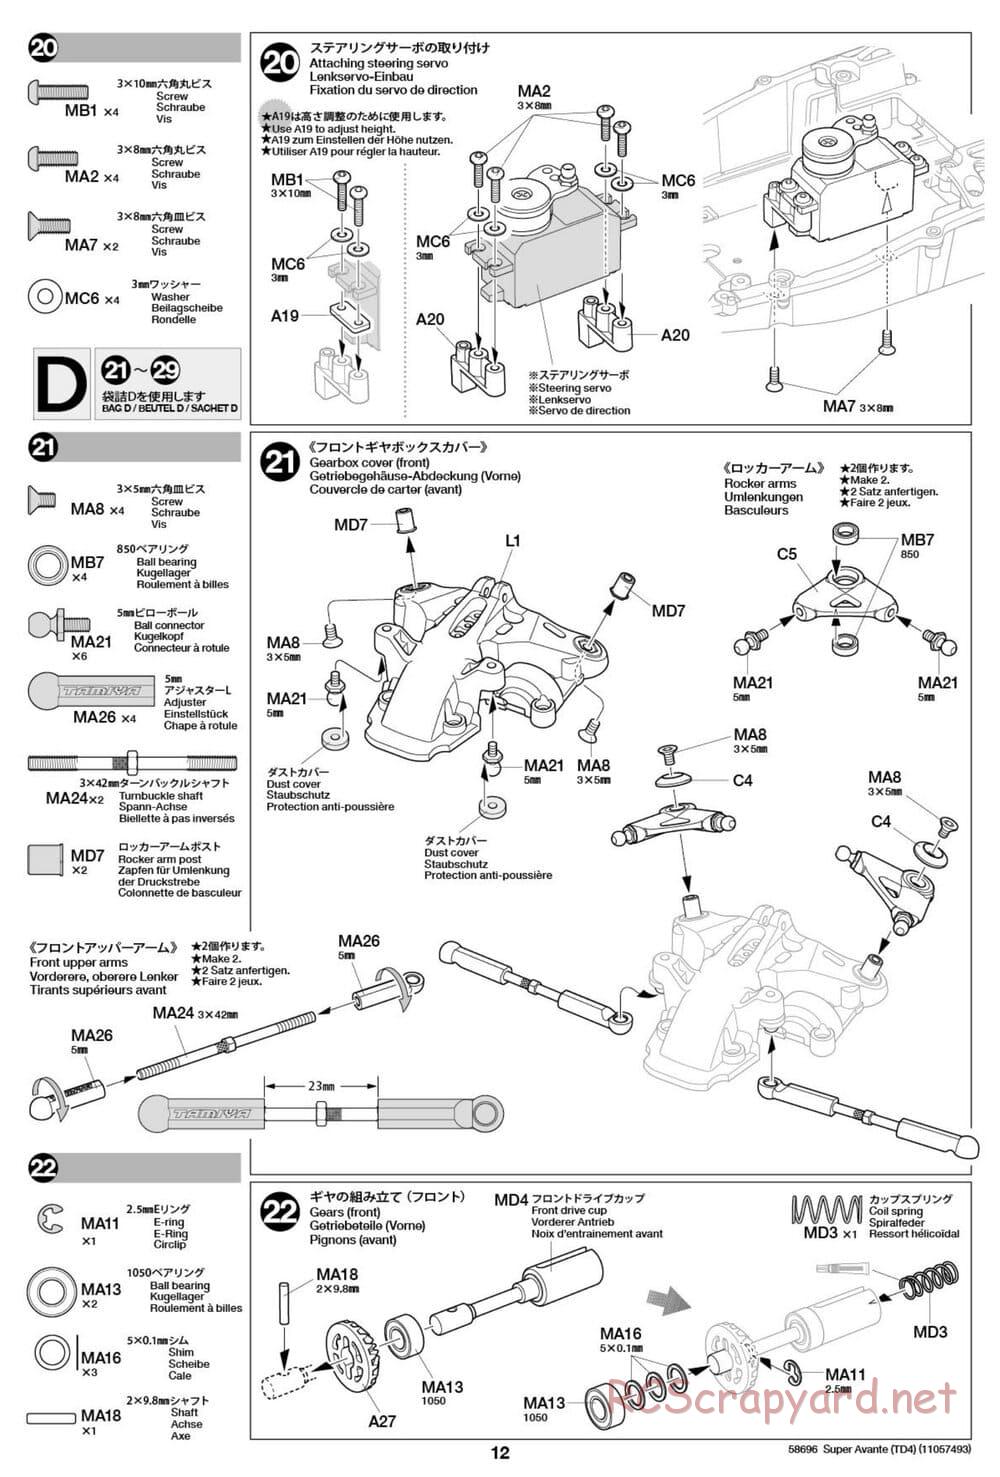 Tamiya - Super Avante - TD4 Chassis - Manual - Page 13